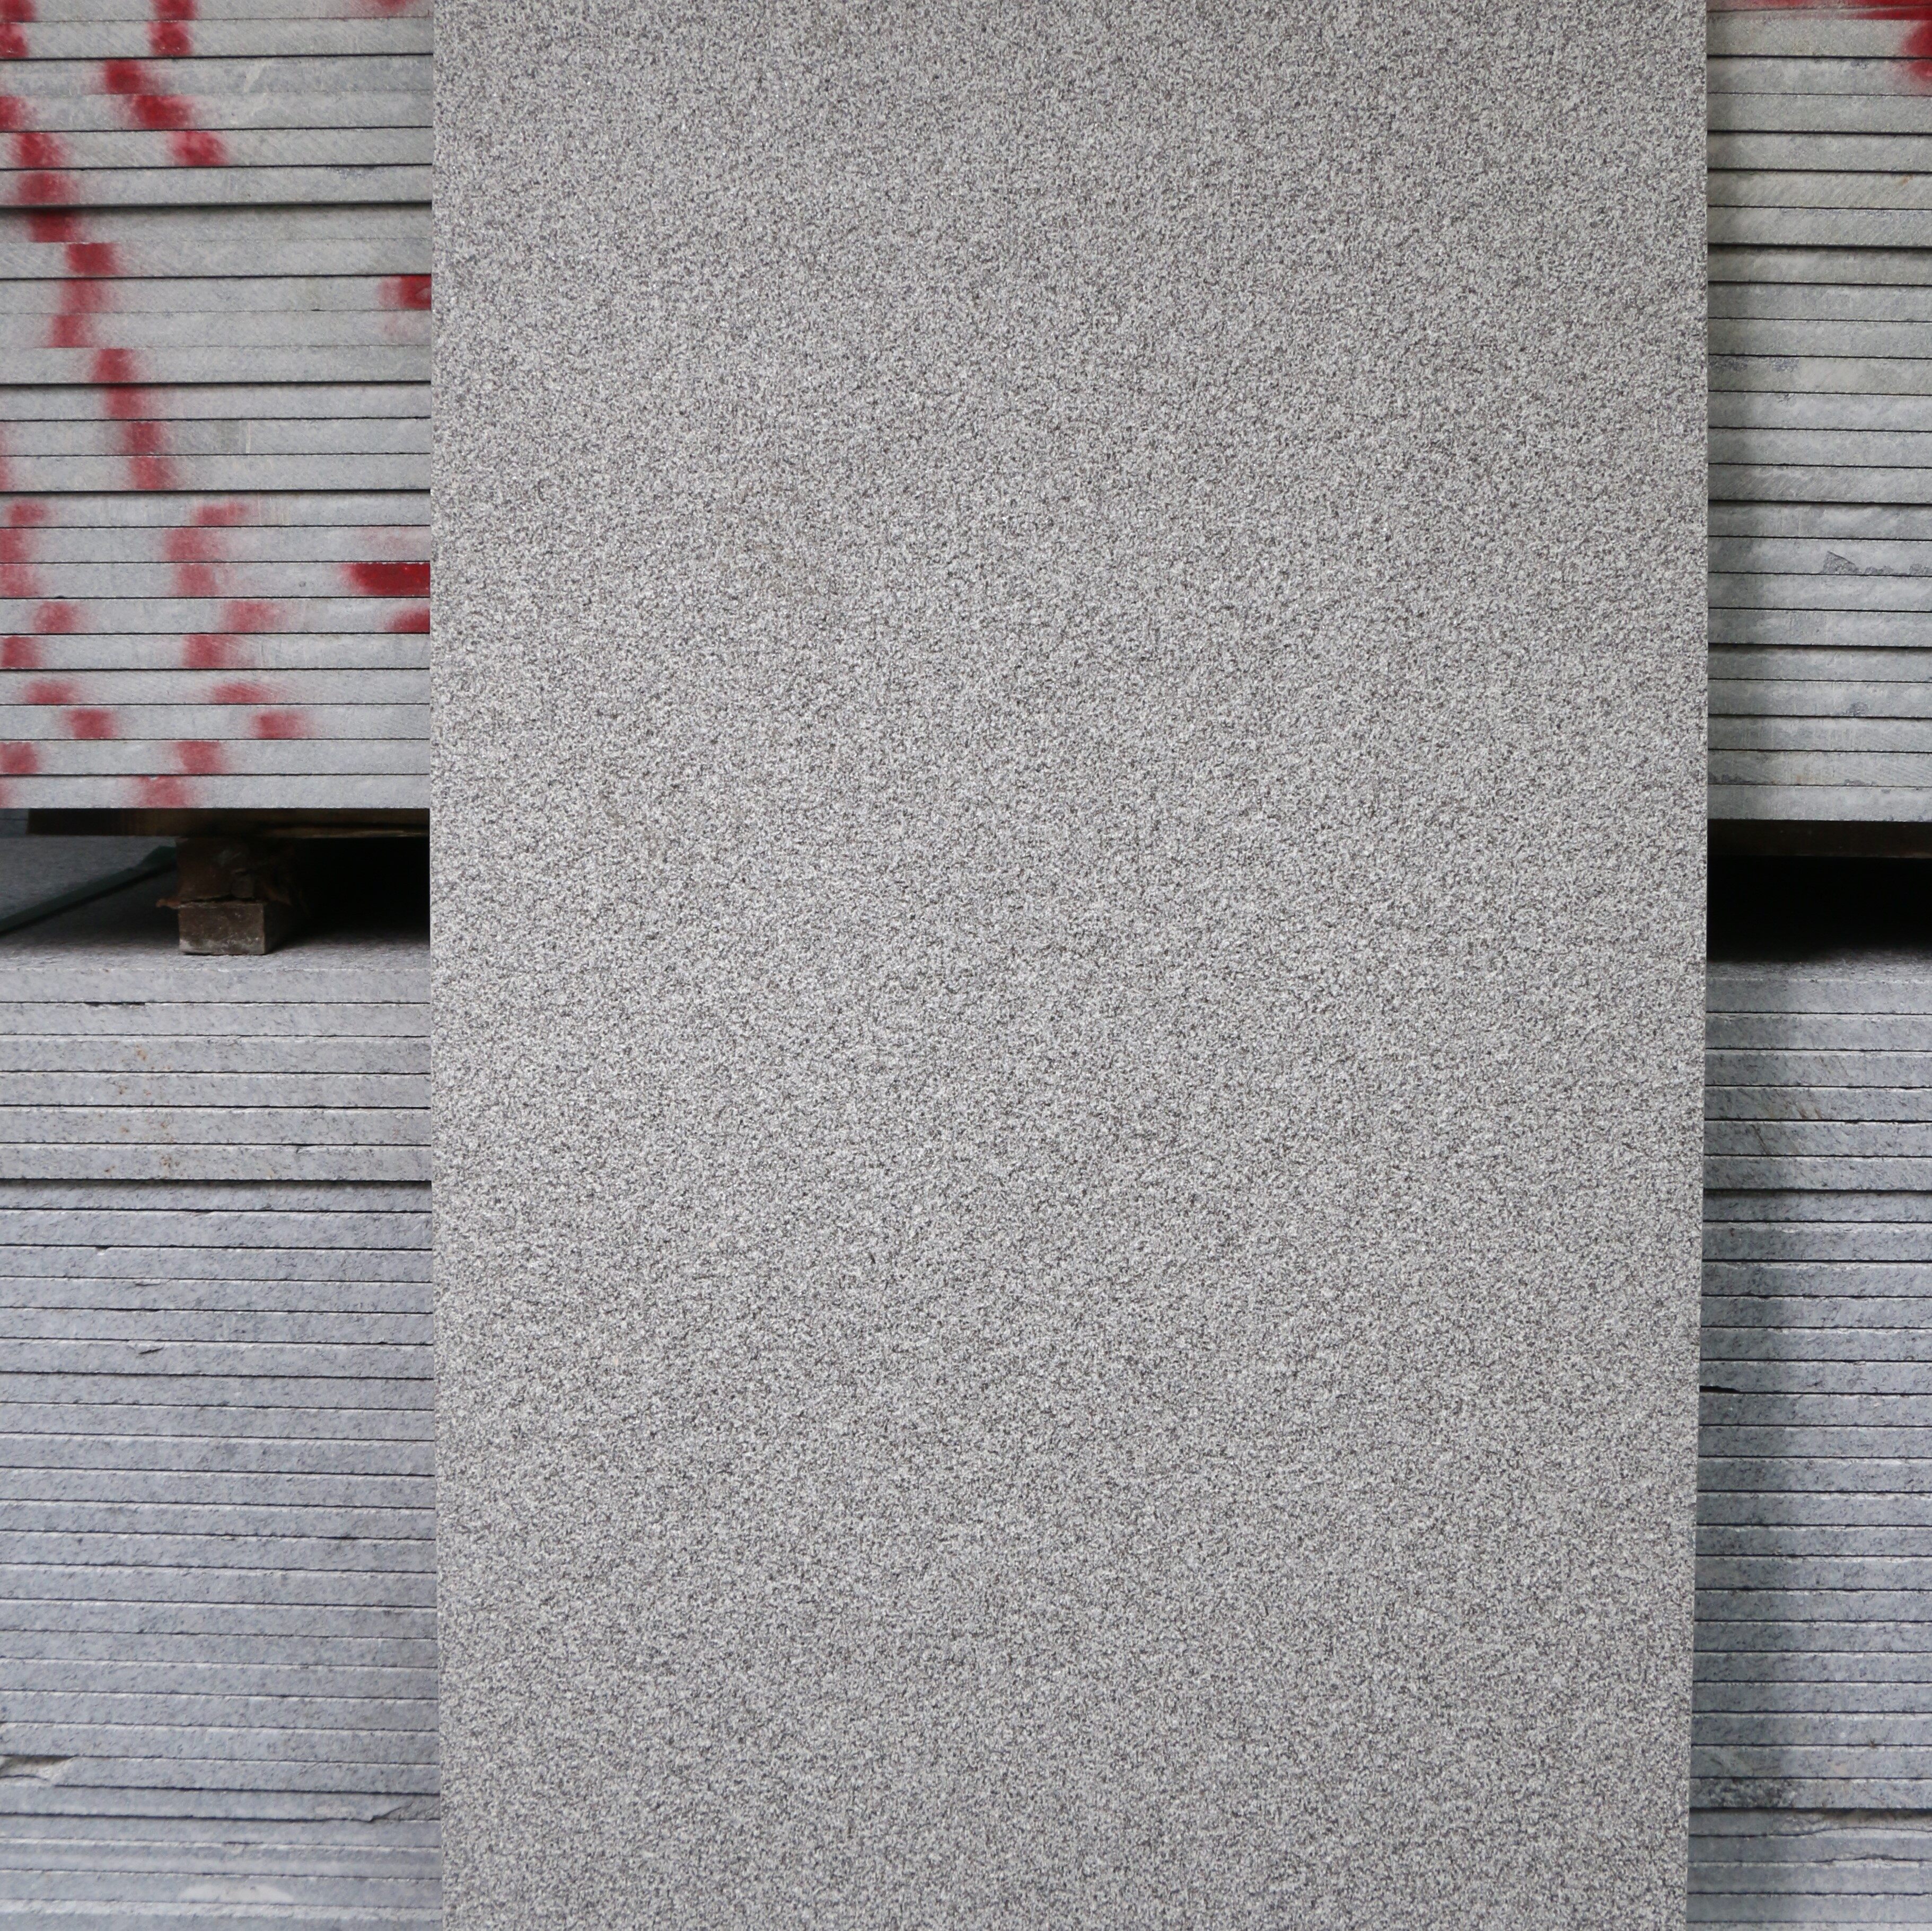 steel gray granite slab, white and gray granite slabs